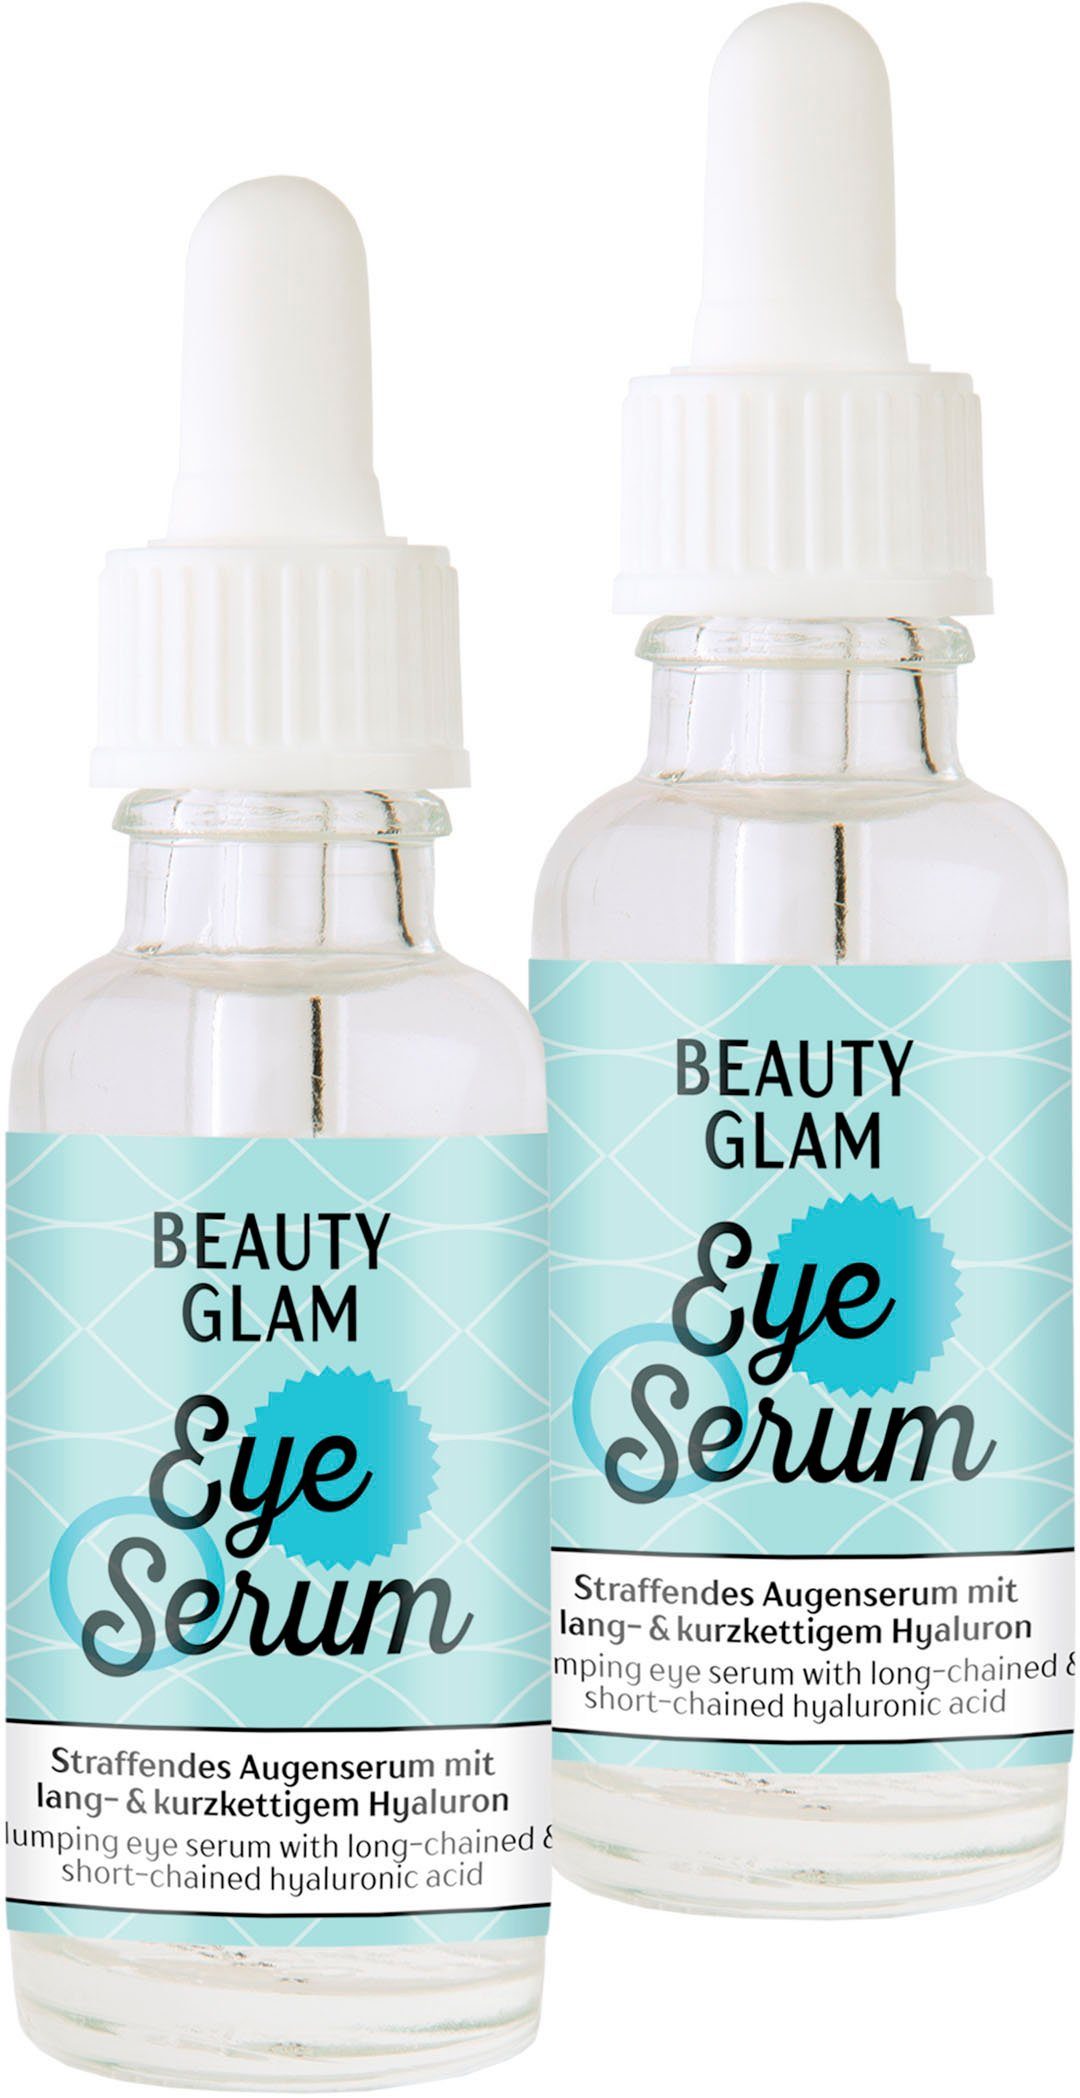 BEAUTY GLAM Augenserum 2 Serum, Eye